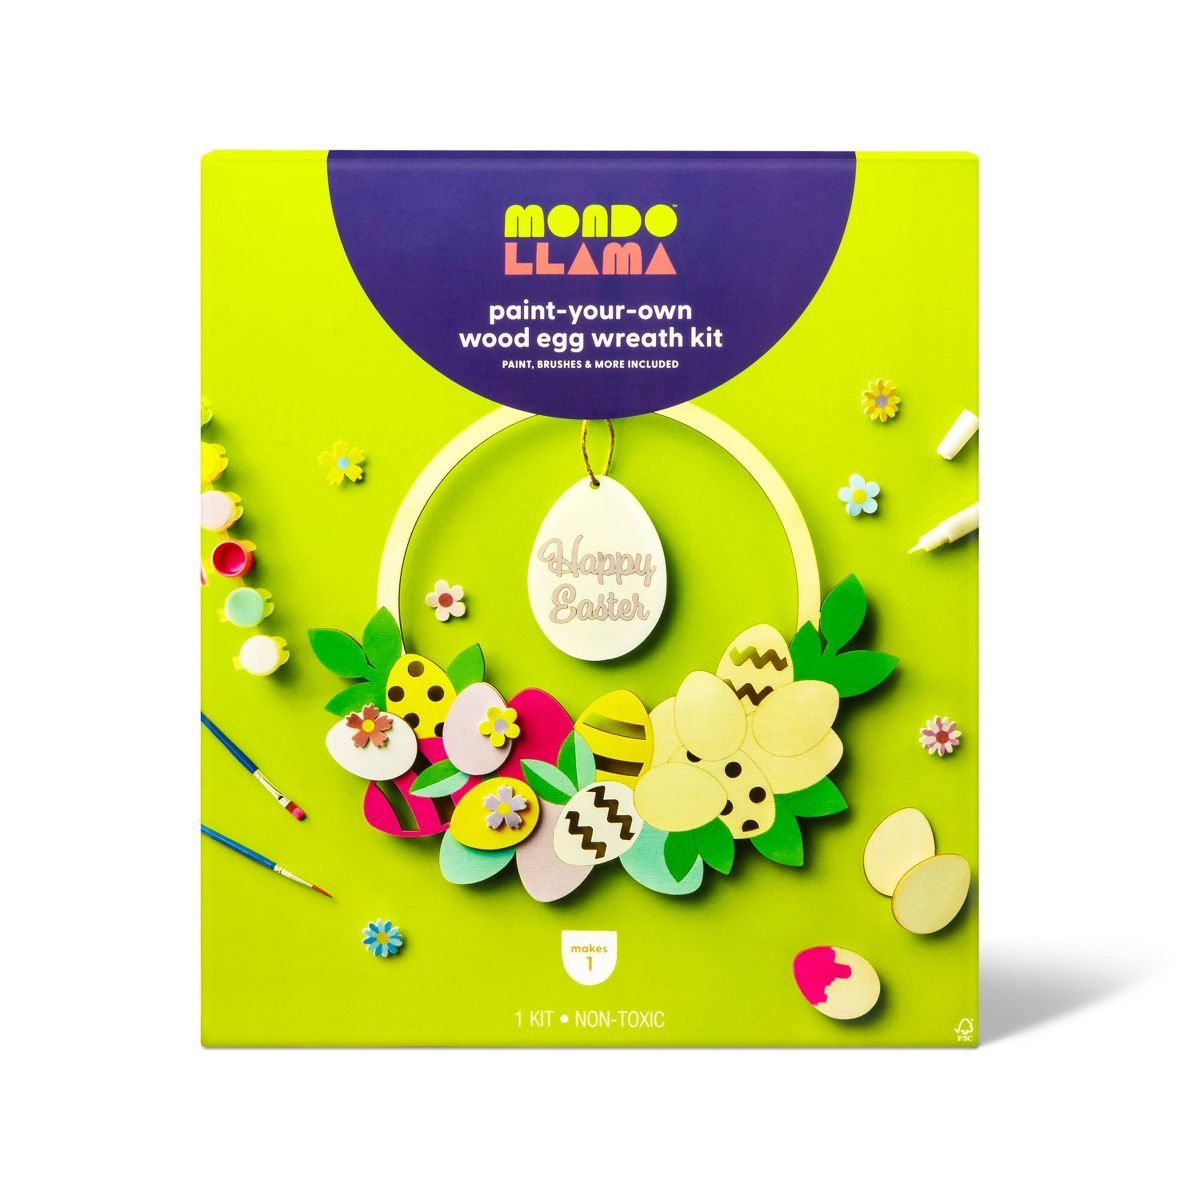 Paint-Your-Own Wood Easter Egg Wreath Kit - Mondo Llama™ | Target